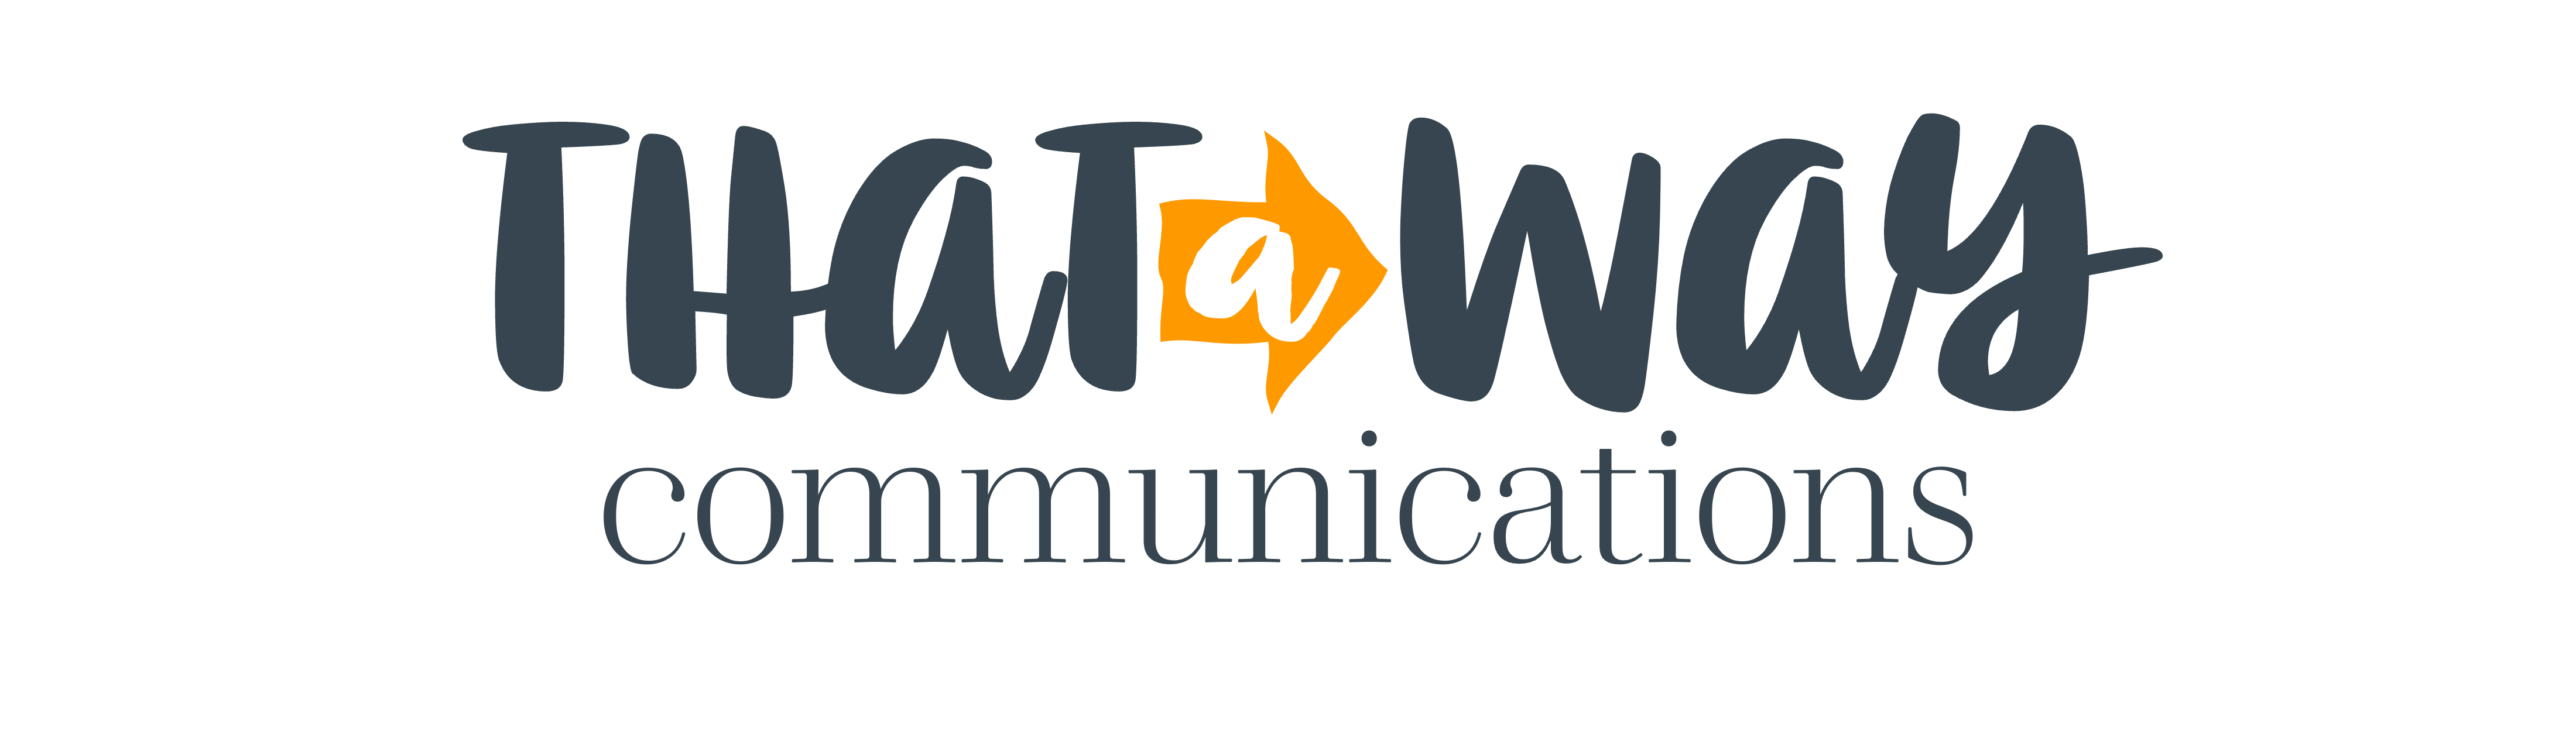 Thataway Communications logo